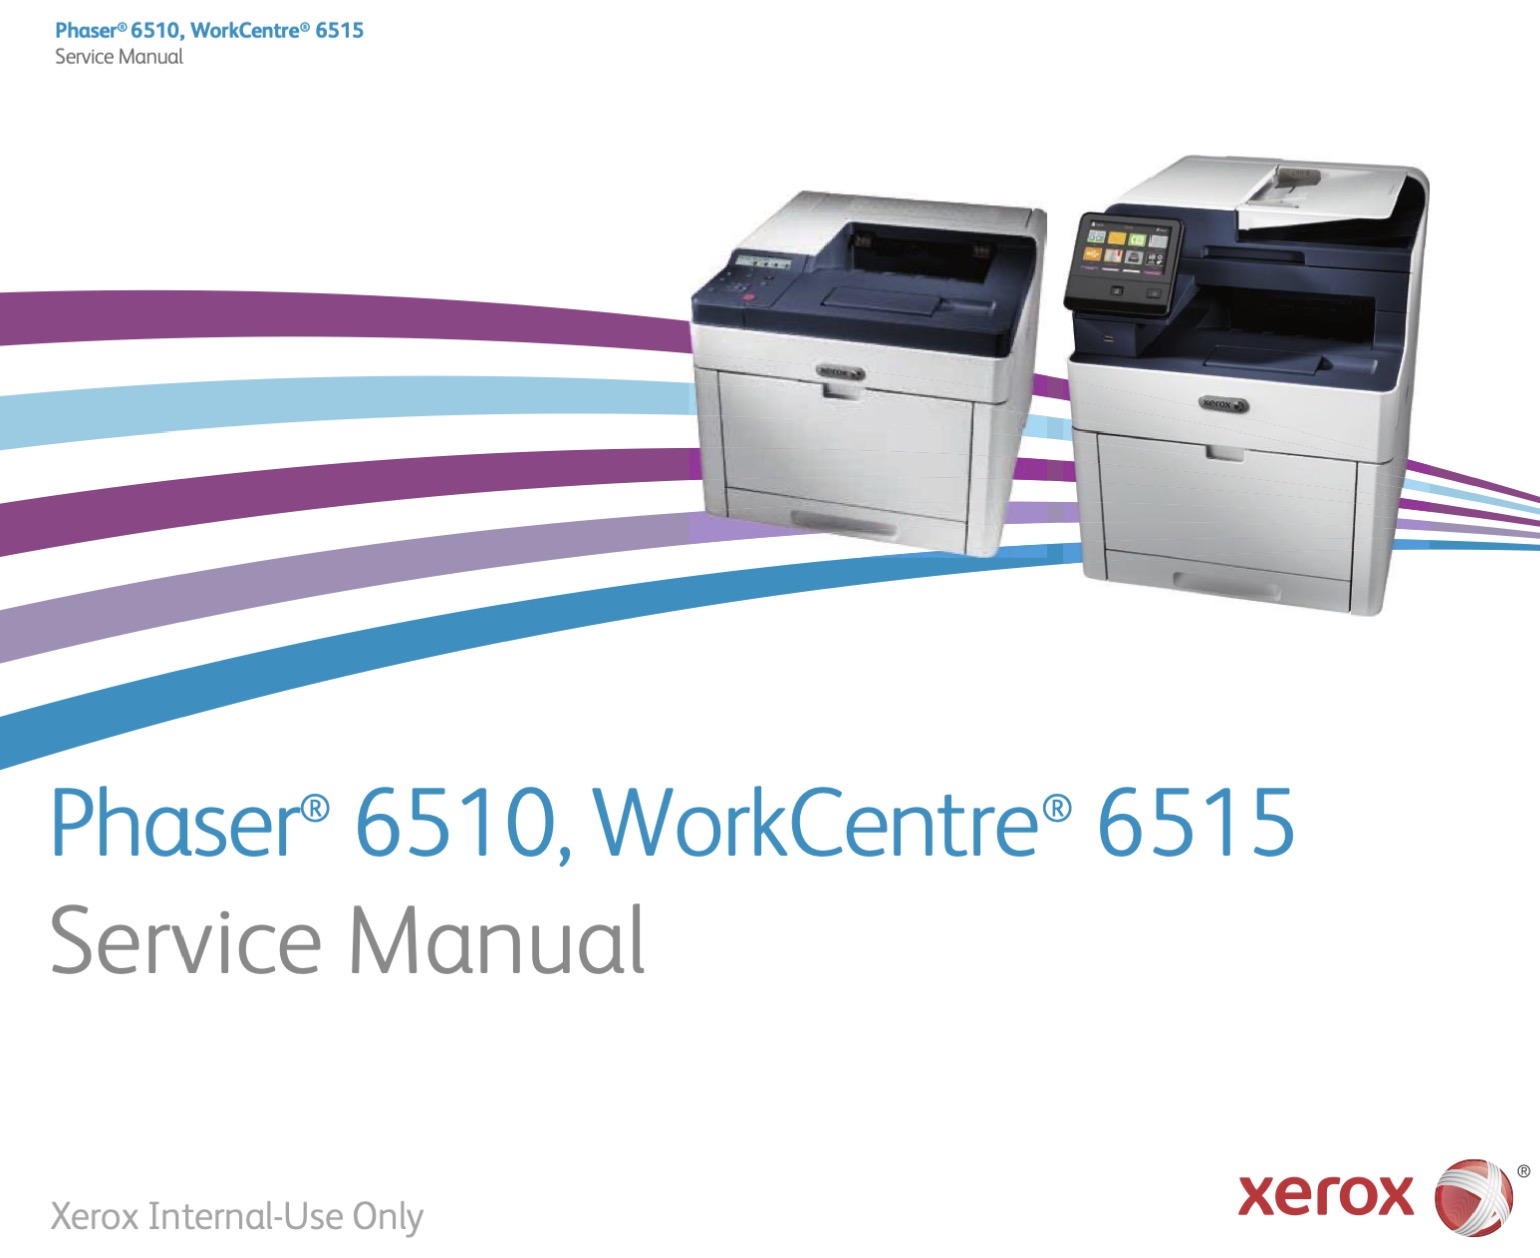 Xerox WorkCentre WorkCentre 6515, Phaser 6510  Printer Service Manuals, Parts List, Wiring Diagram